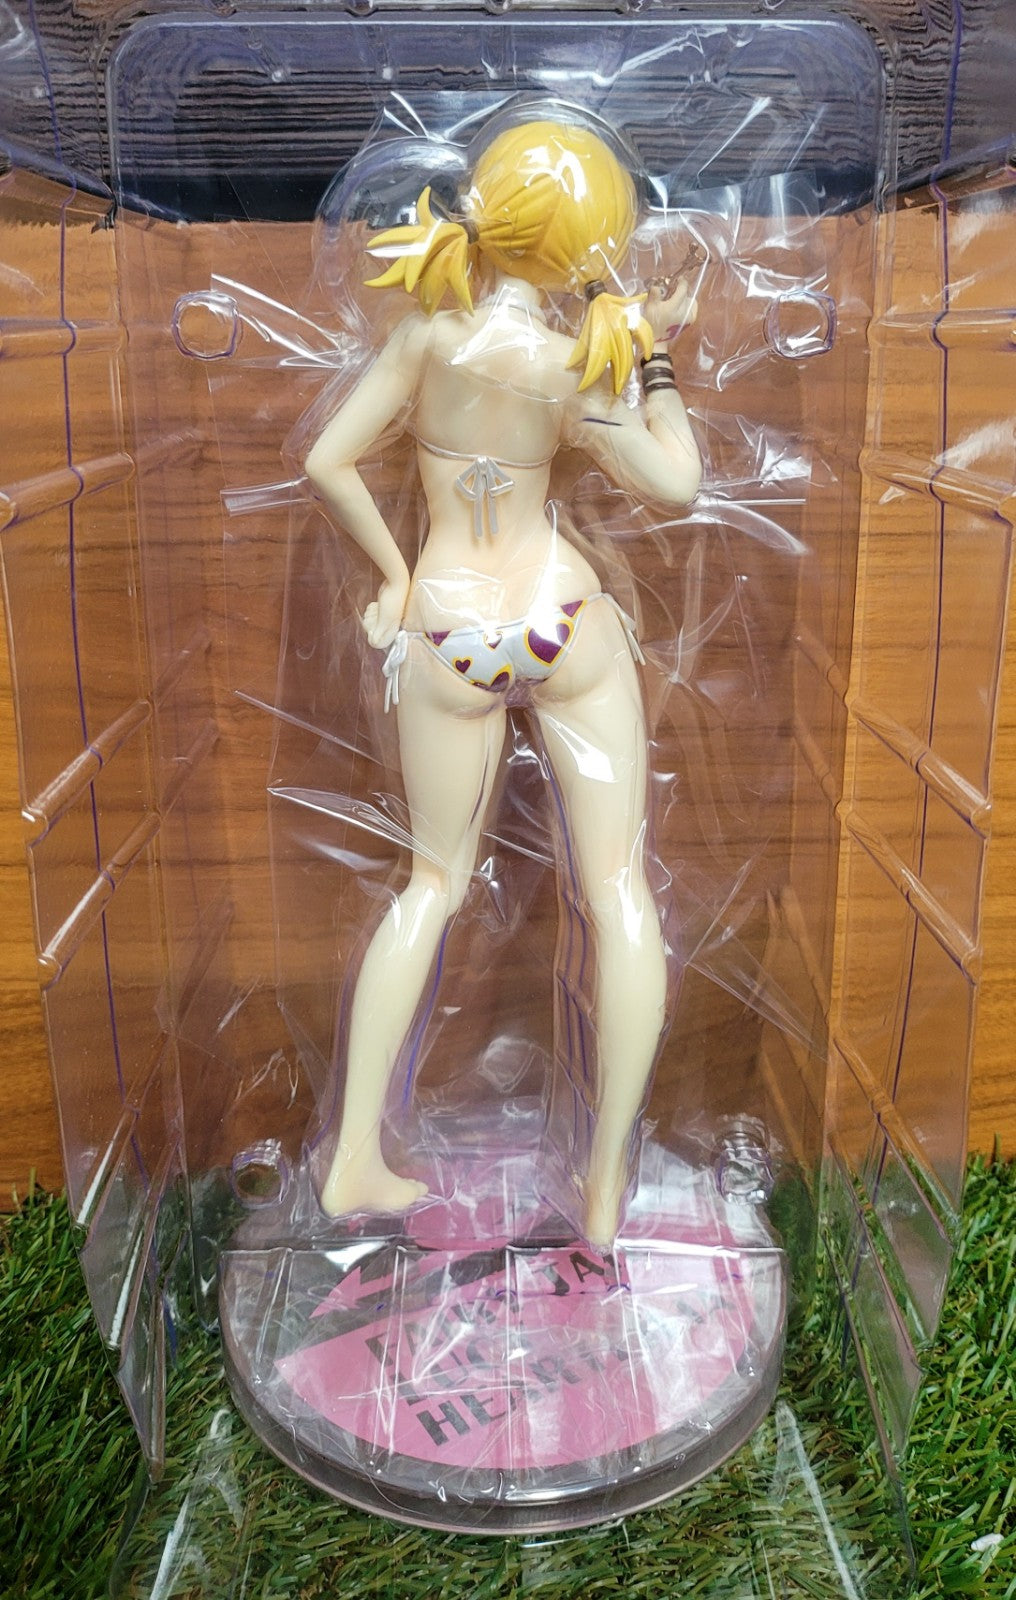 Fairy Tail X-Plus Lucy 1/7 Scale Figur Nippon4U